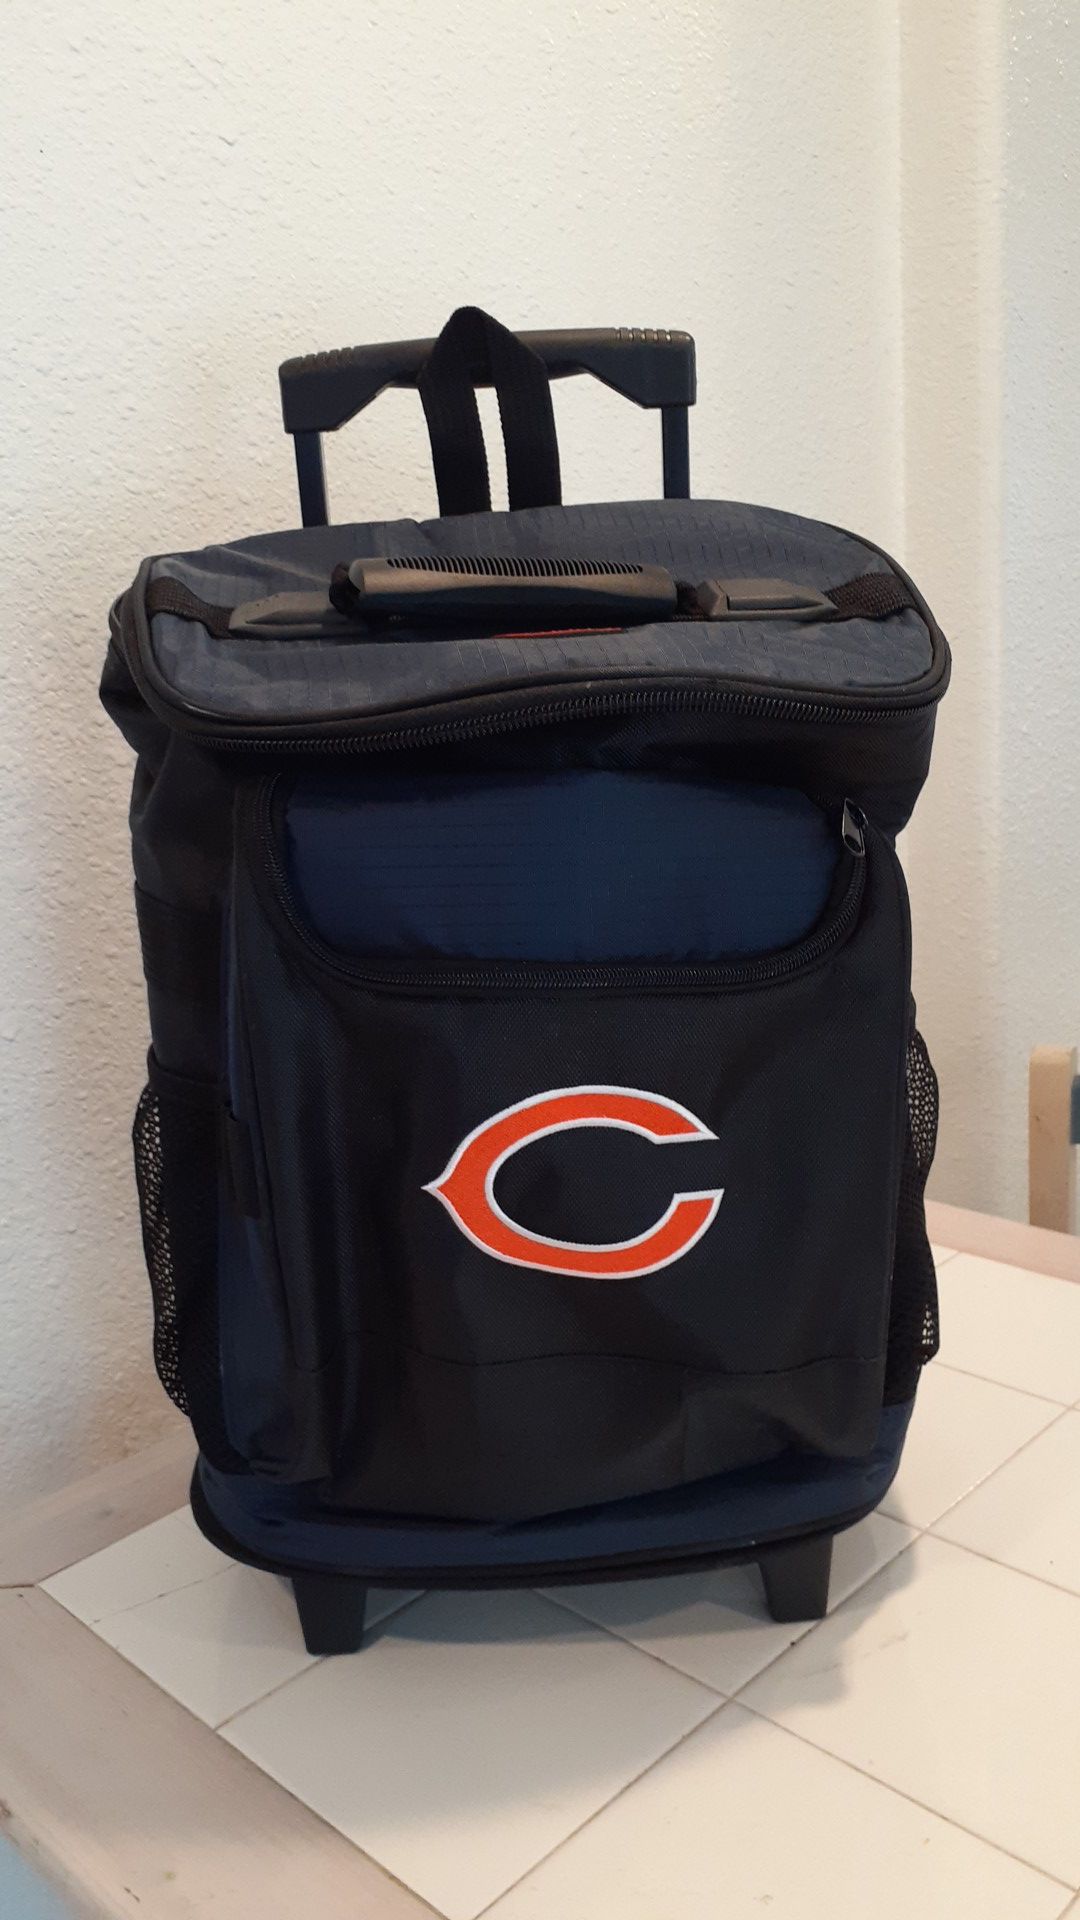 Chicago Bears backpack &Rolling Cooler.